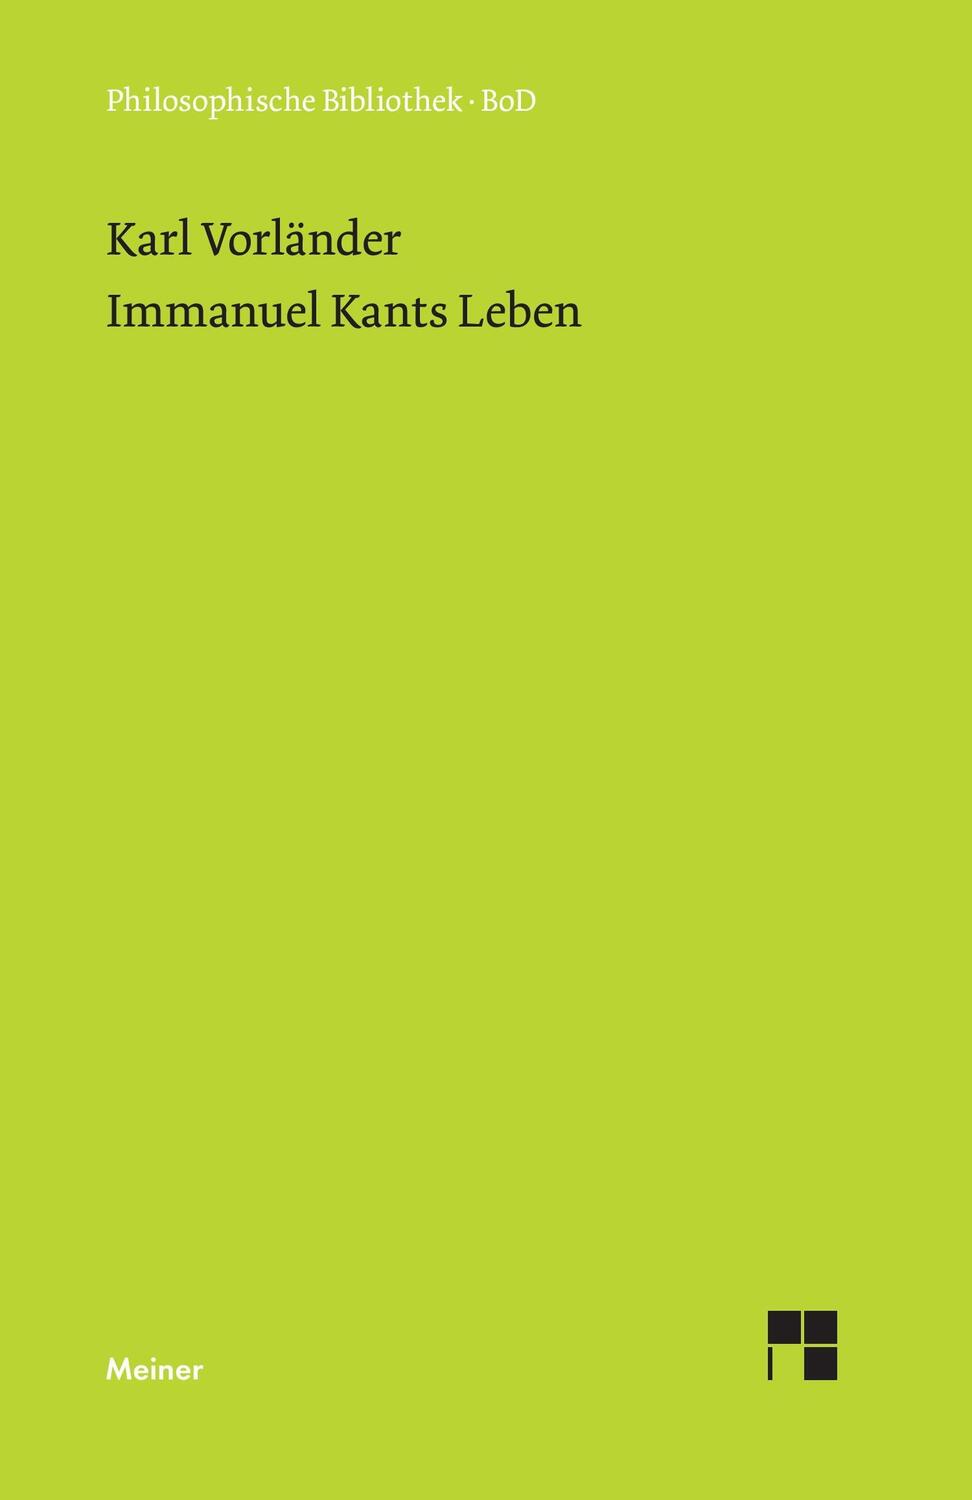 Immanuel Kants Leben - Vorländer, Karl